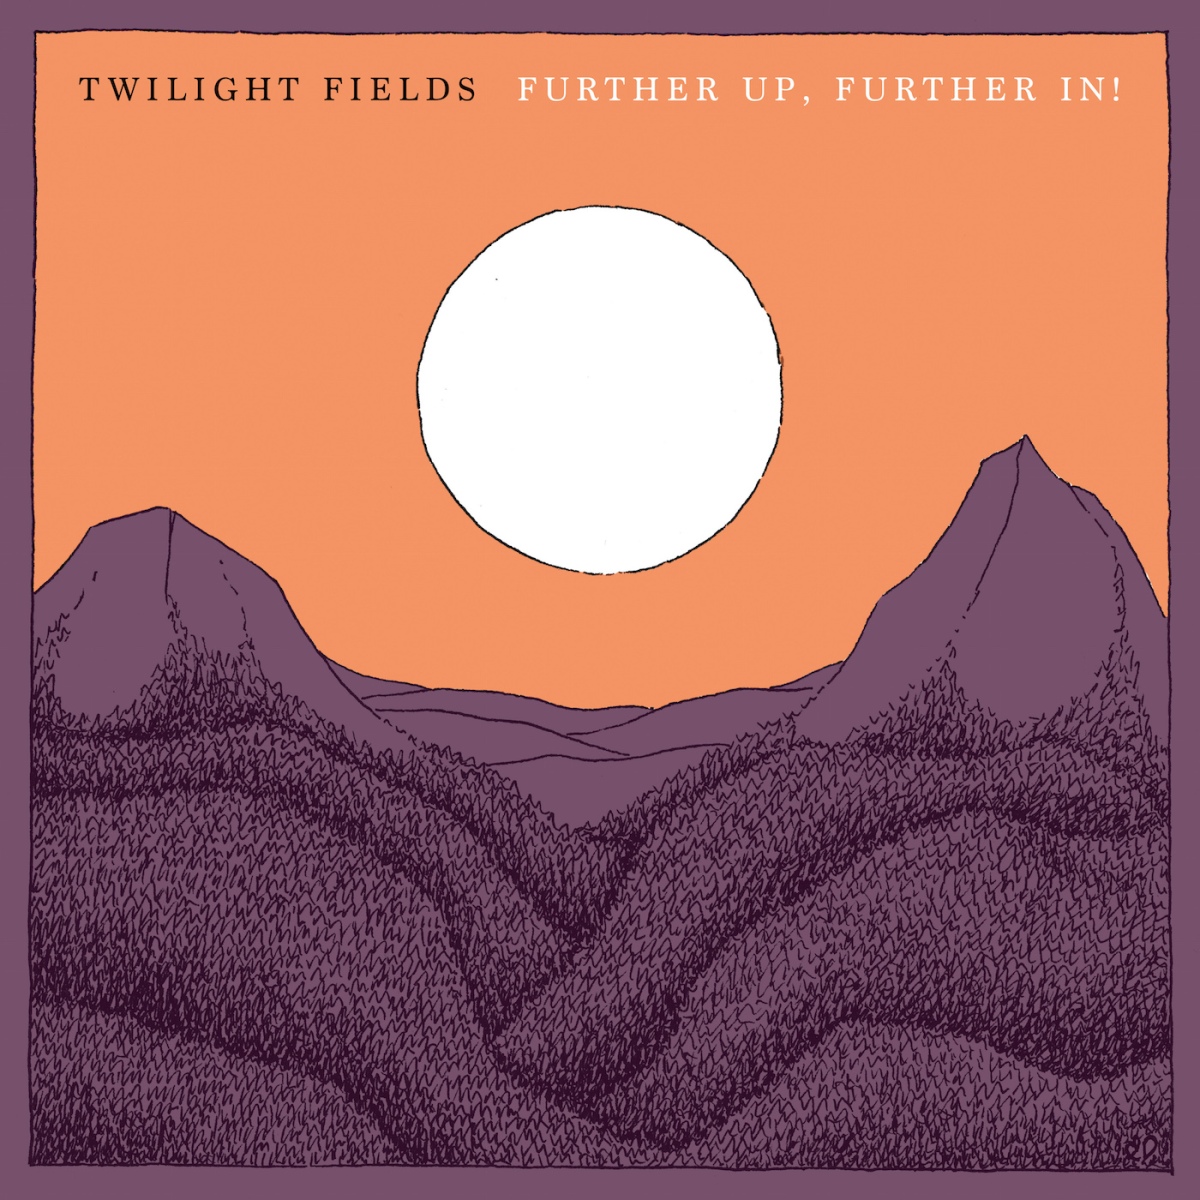 Twilight fields Micus. Fields at Nightfall. Album Covers in field. Zara fields at Nightfall.